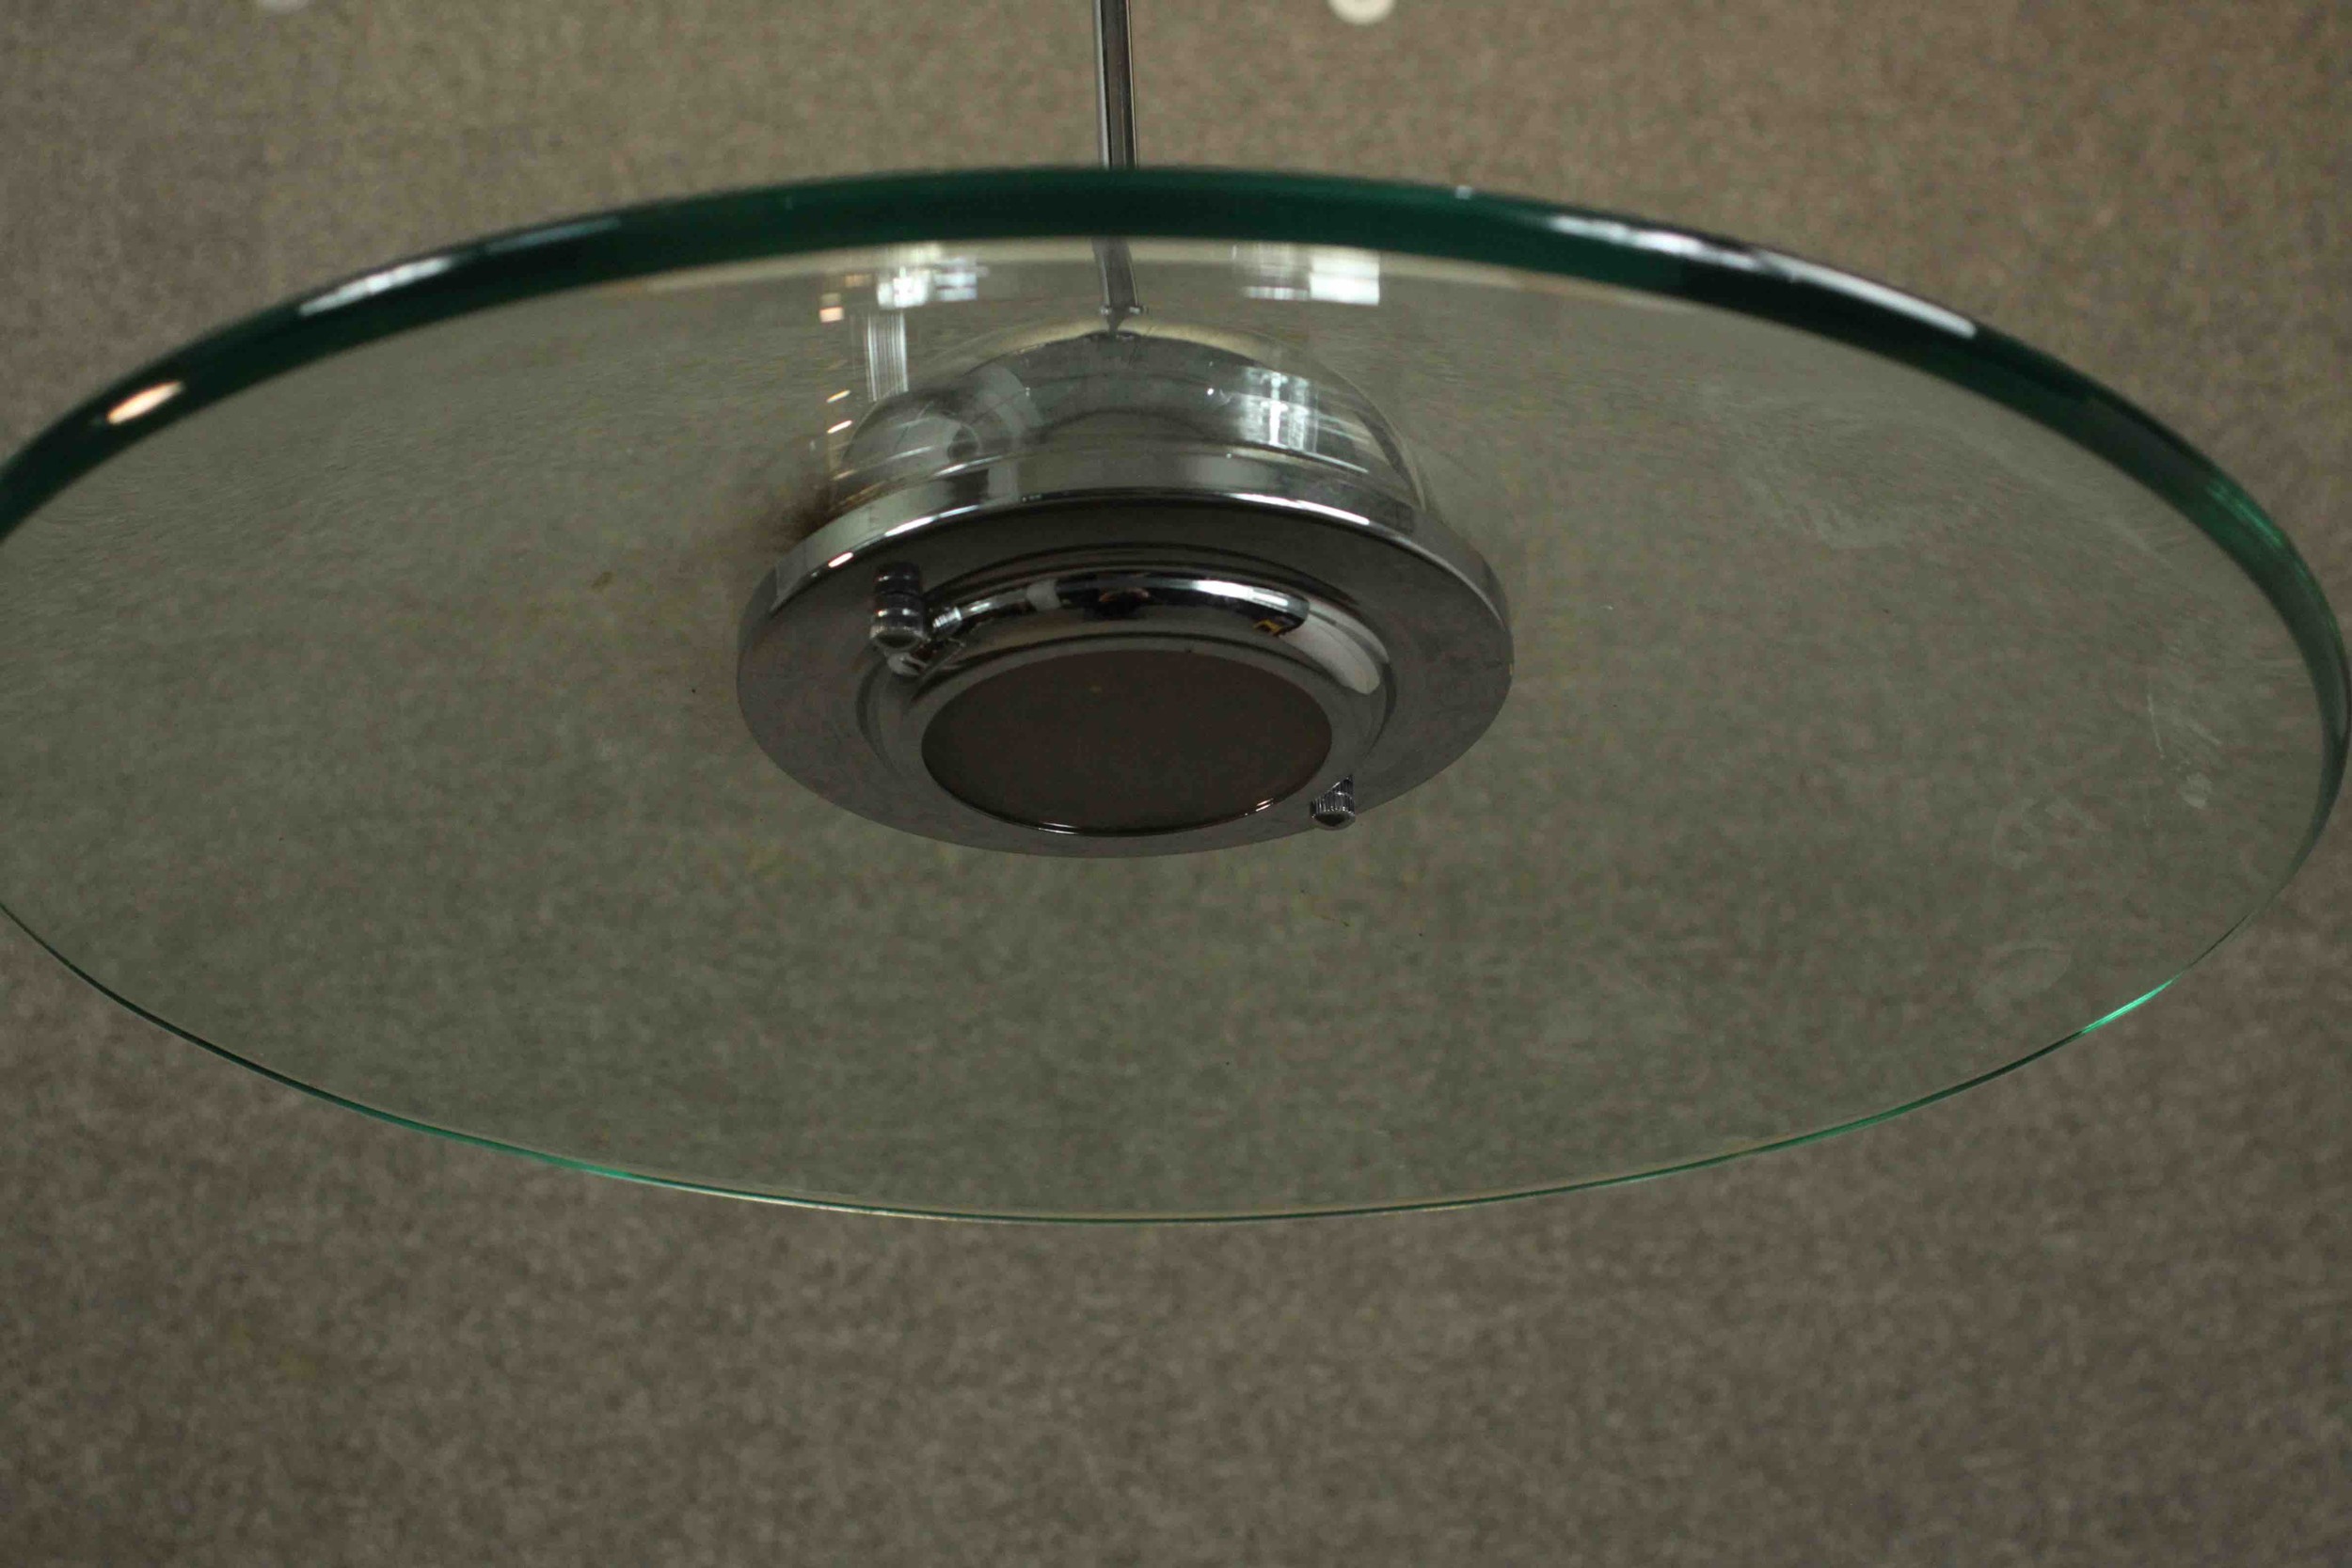 DAR Lighting; A Hemisphere 1 flying saucer style pendant light, with a telescopic chrome stem, - Image 4 of 4